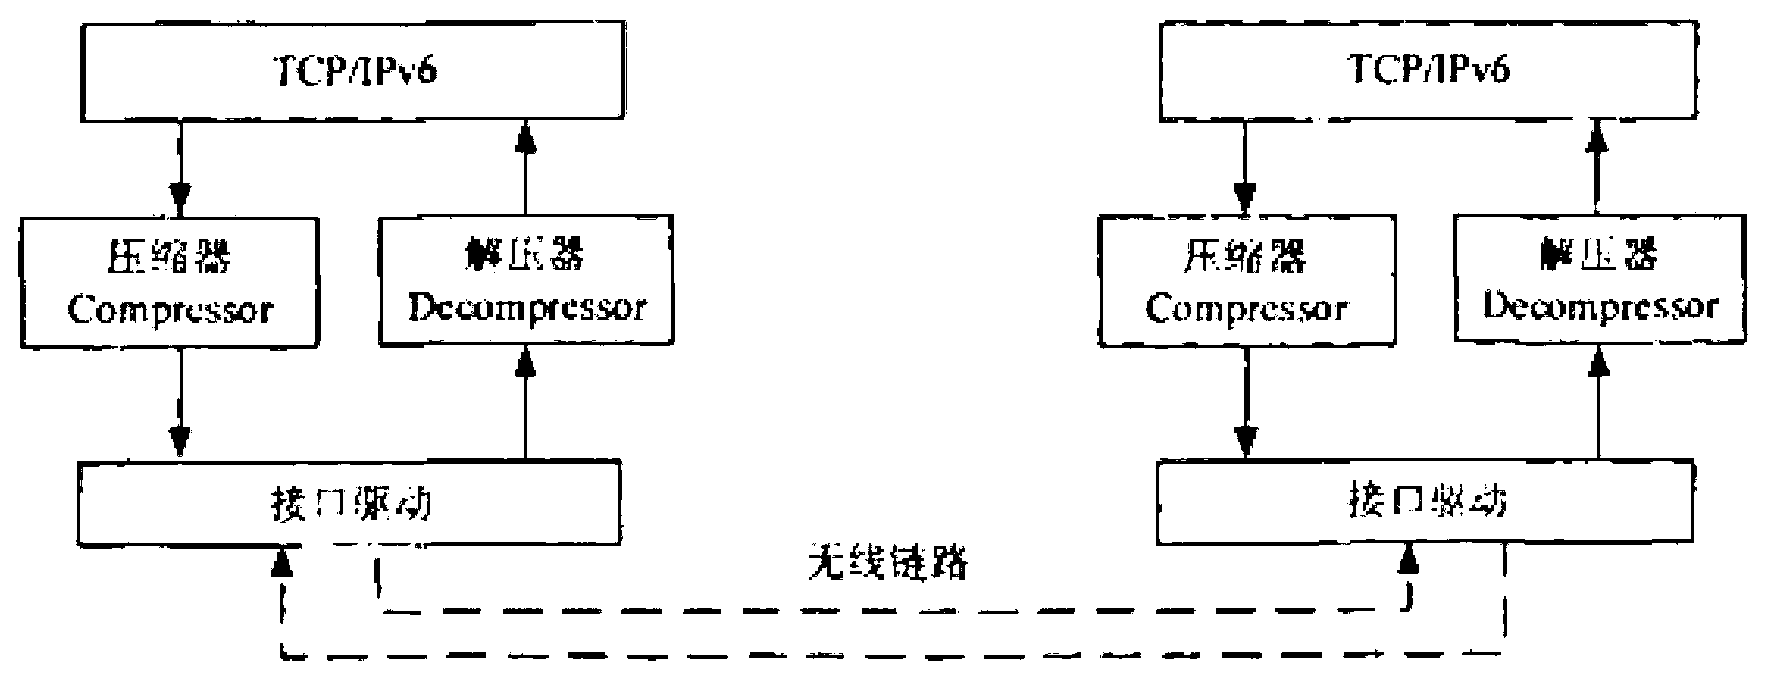 TCP (transmission control protocol) header compression method in wireless IPv6 (internet protocol version 6) network